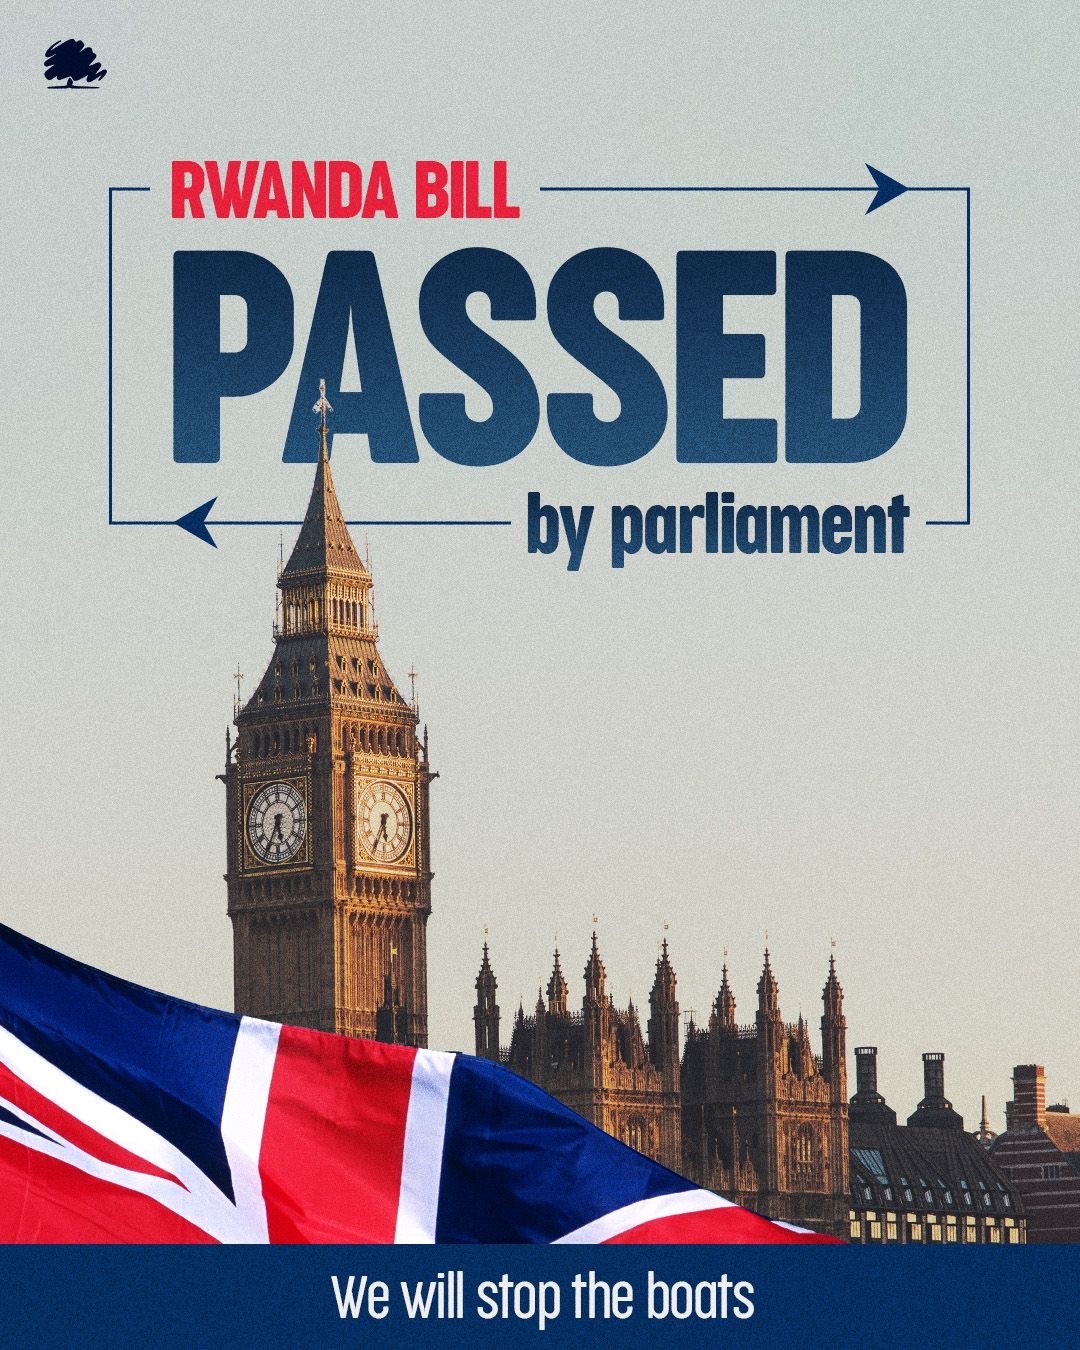 Rwanda Bill passed by Parliament